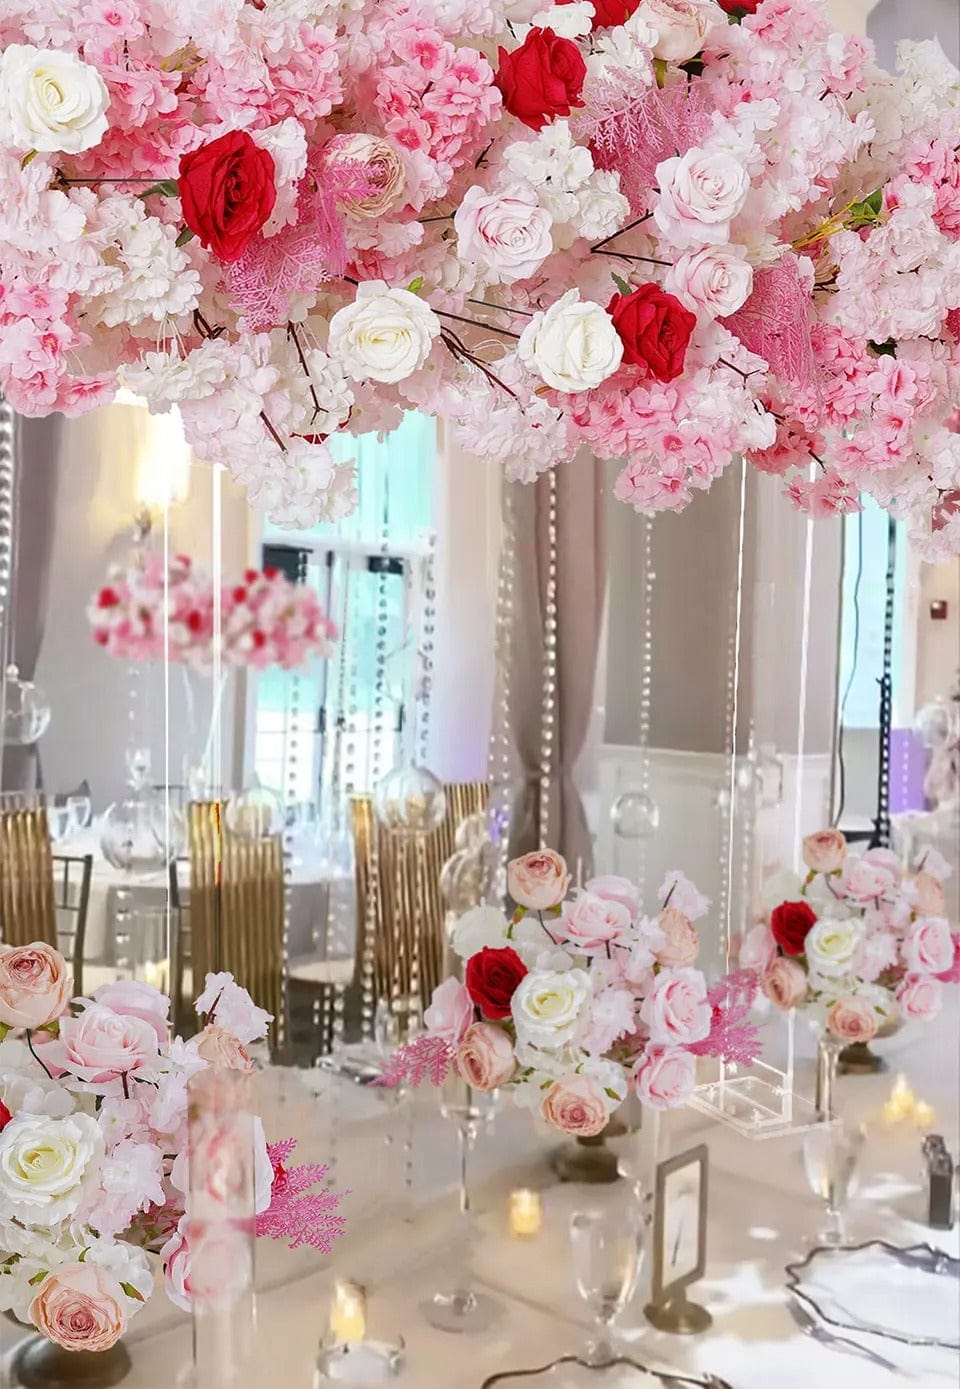 WeddingStory Shop Stunning Pink Cherry Blossom Arrangement - Perfect for Weddings & Events!